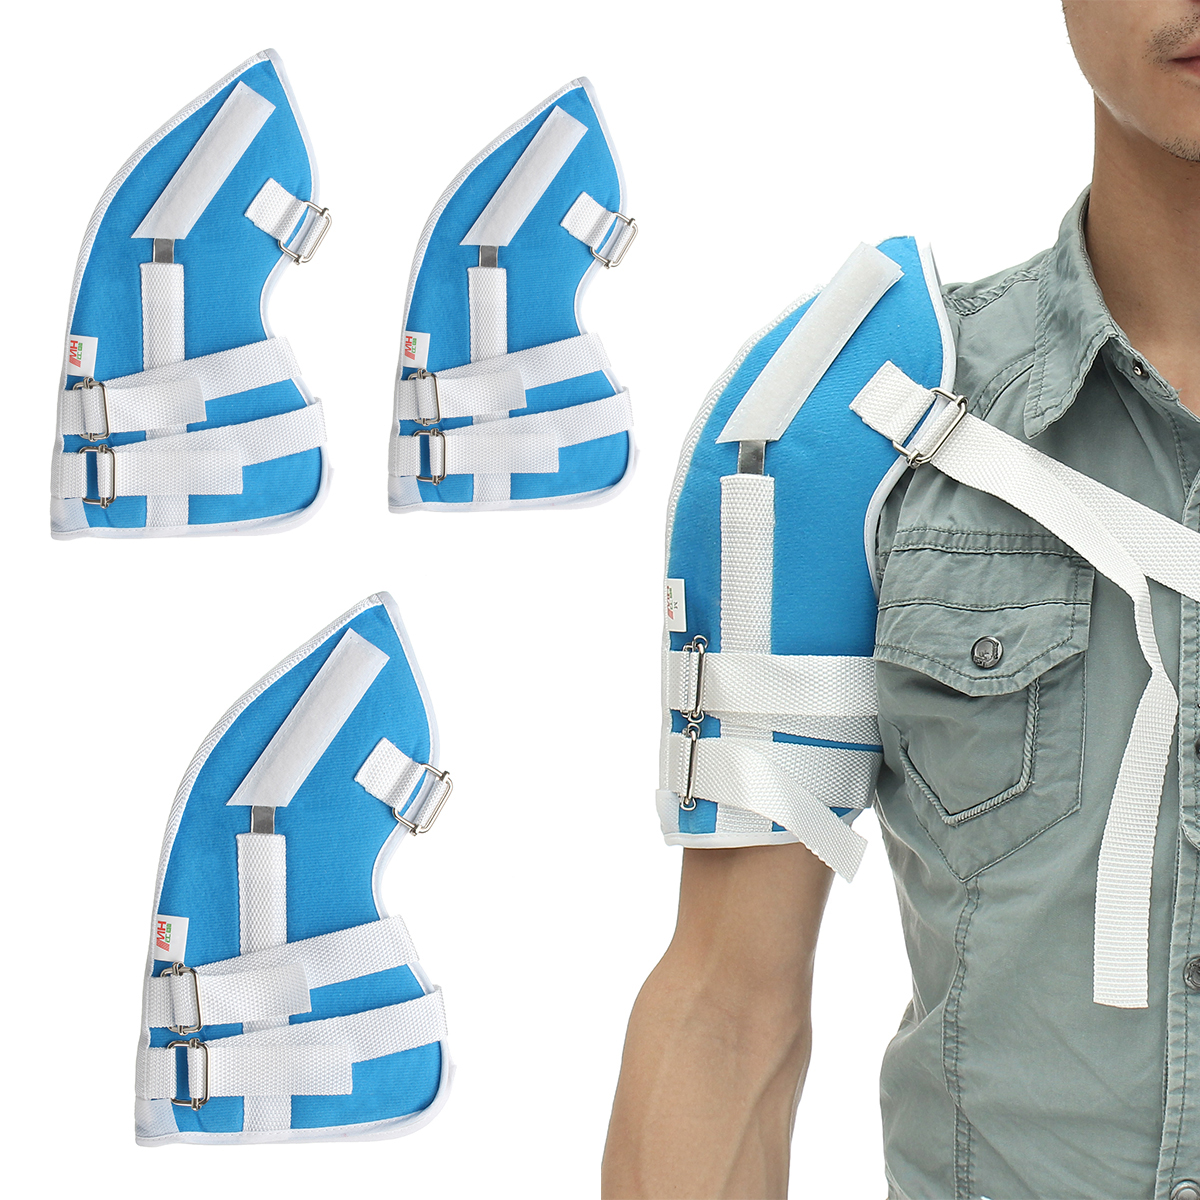 Reborn-Strap-Brace-Adjustable-Shoulder-Support-Wrap-Dislocation-Arthritis-Pain-Relief-1203864